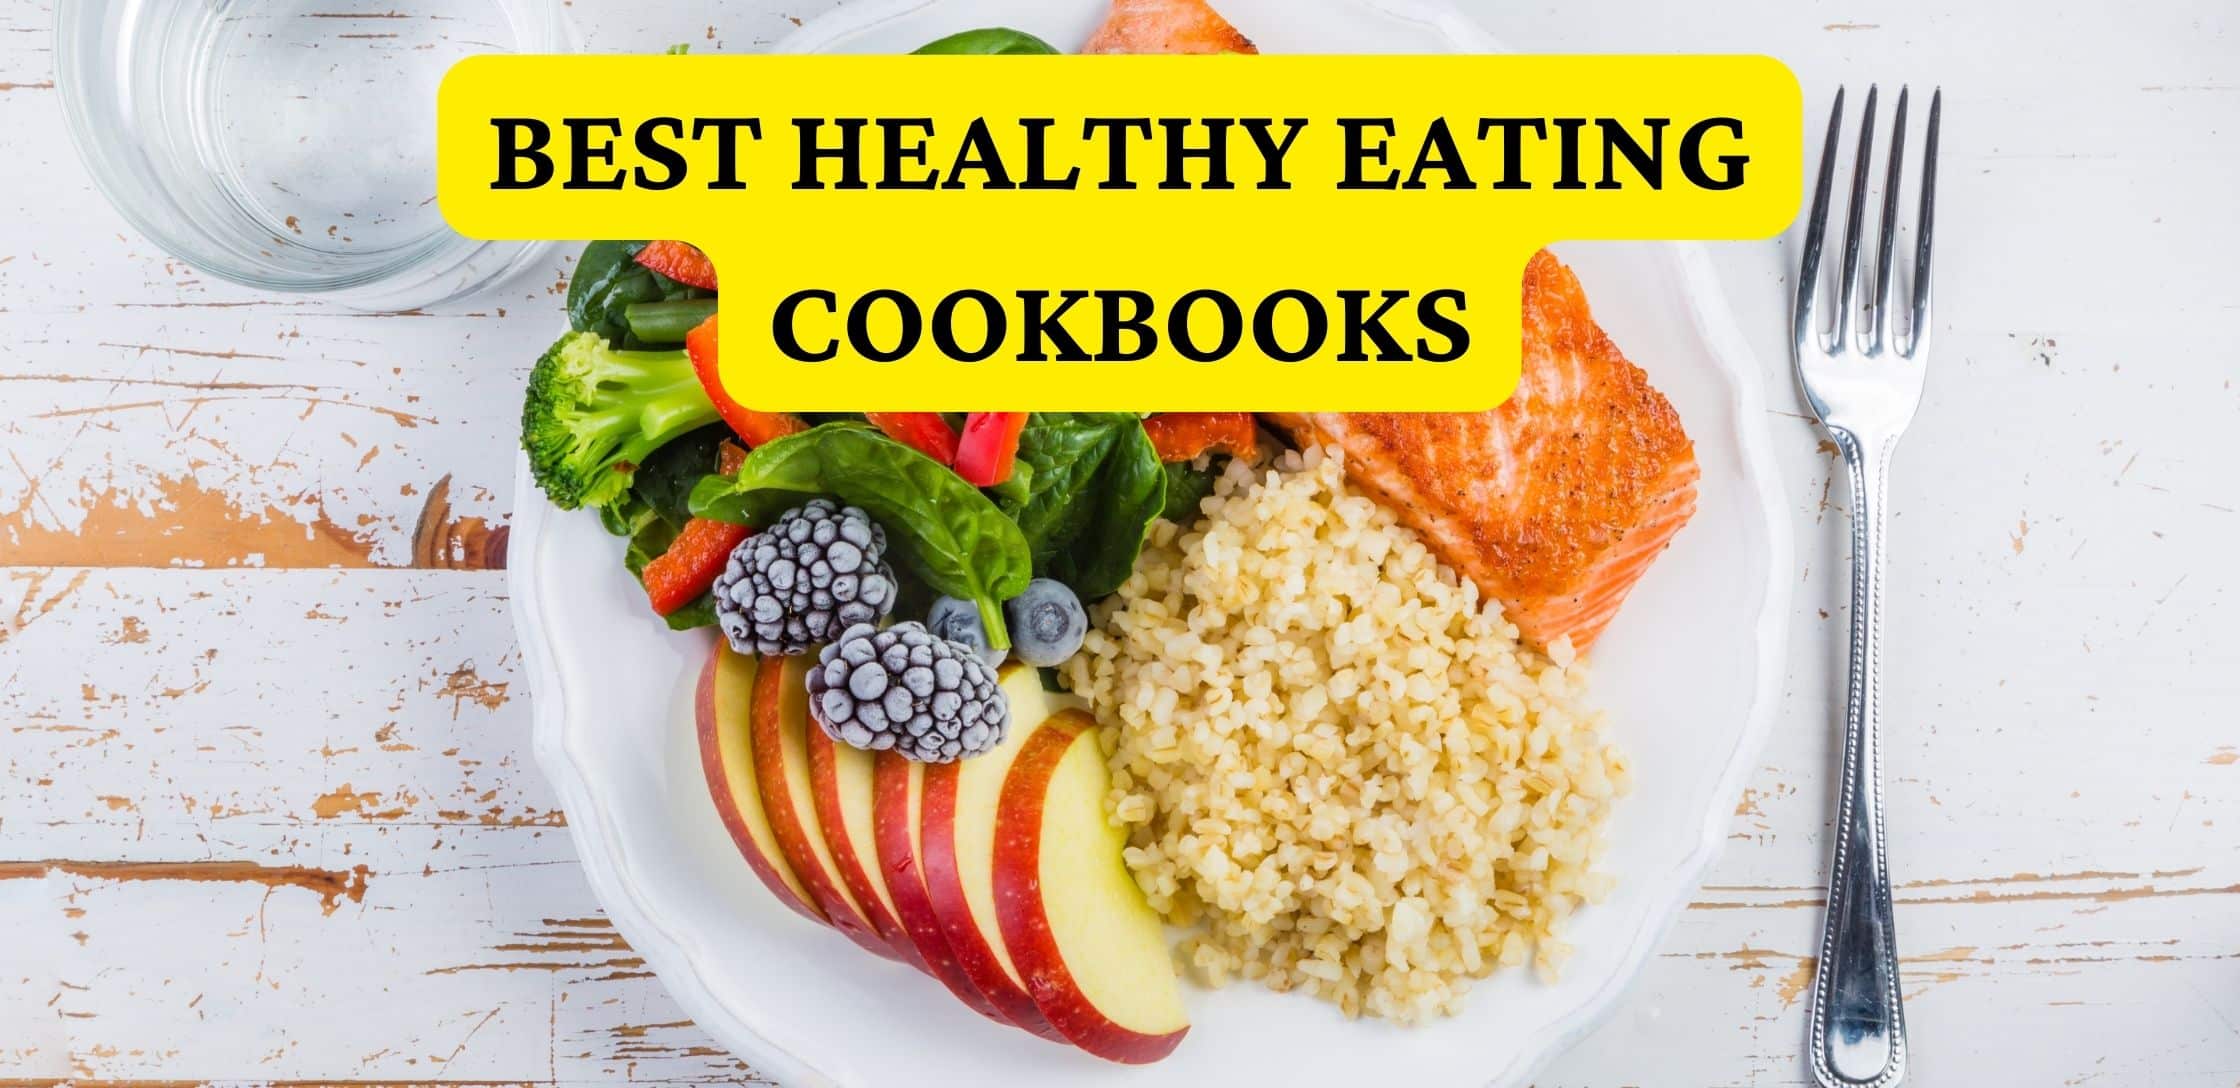 Best Healthy Eating Cookbooks